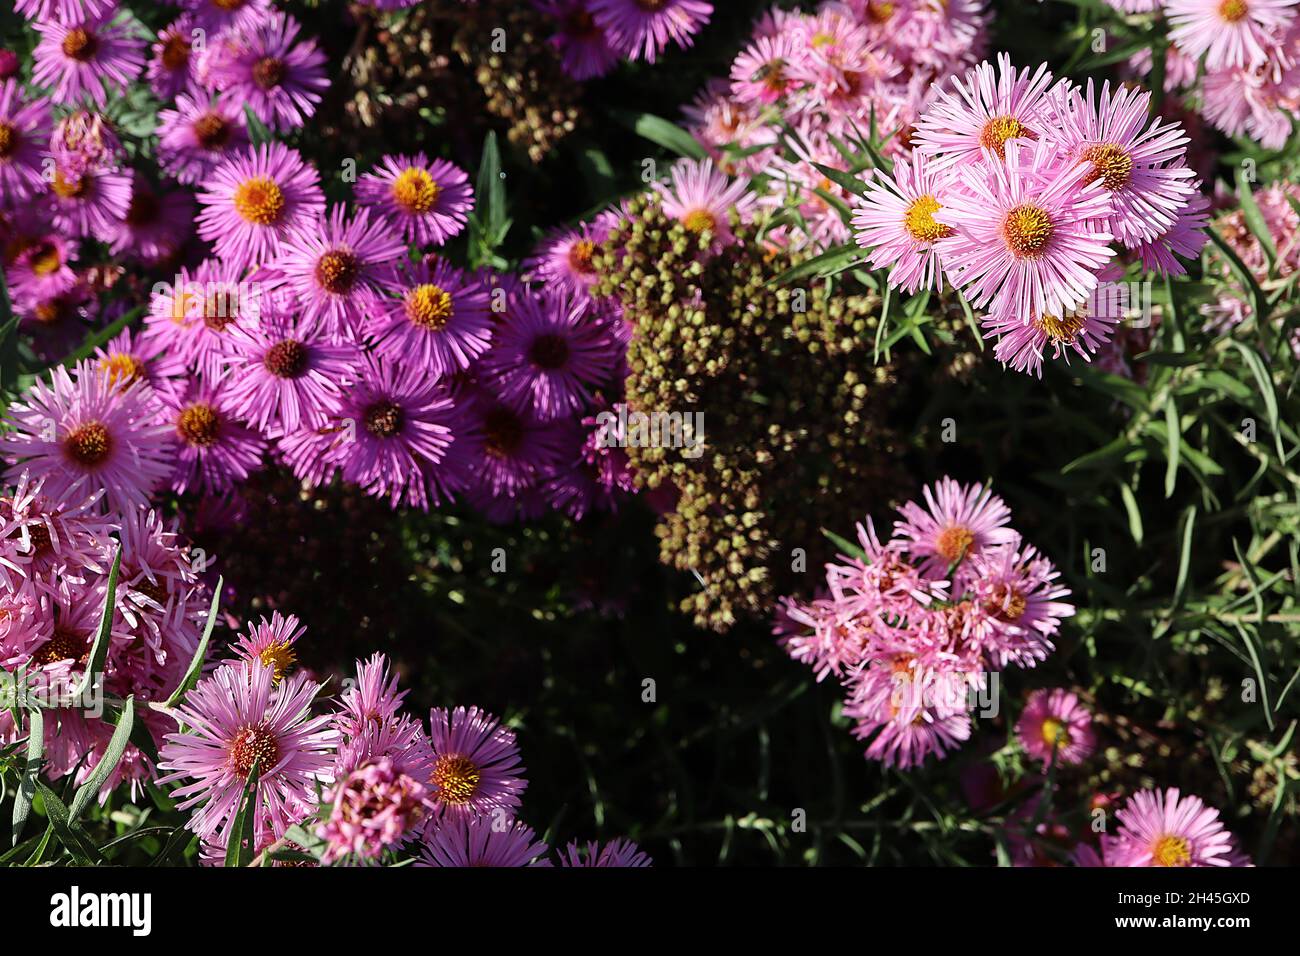 Symphyotrichum novae-angliae ‘Rosa Sieger’ New England Aster Rosa Sieger - doppelte hellrosa Blüten mit sehr schlanken Blütenblättern, Oktober, England, UK Stockfoto